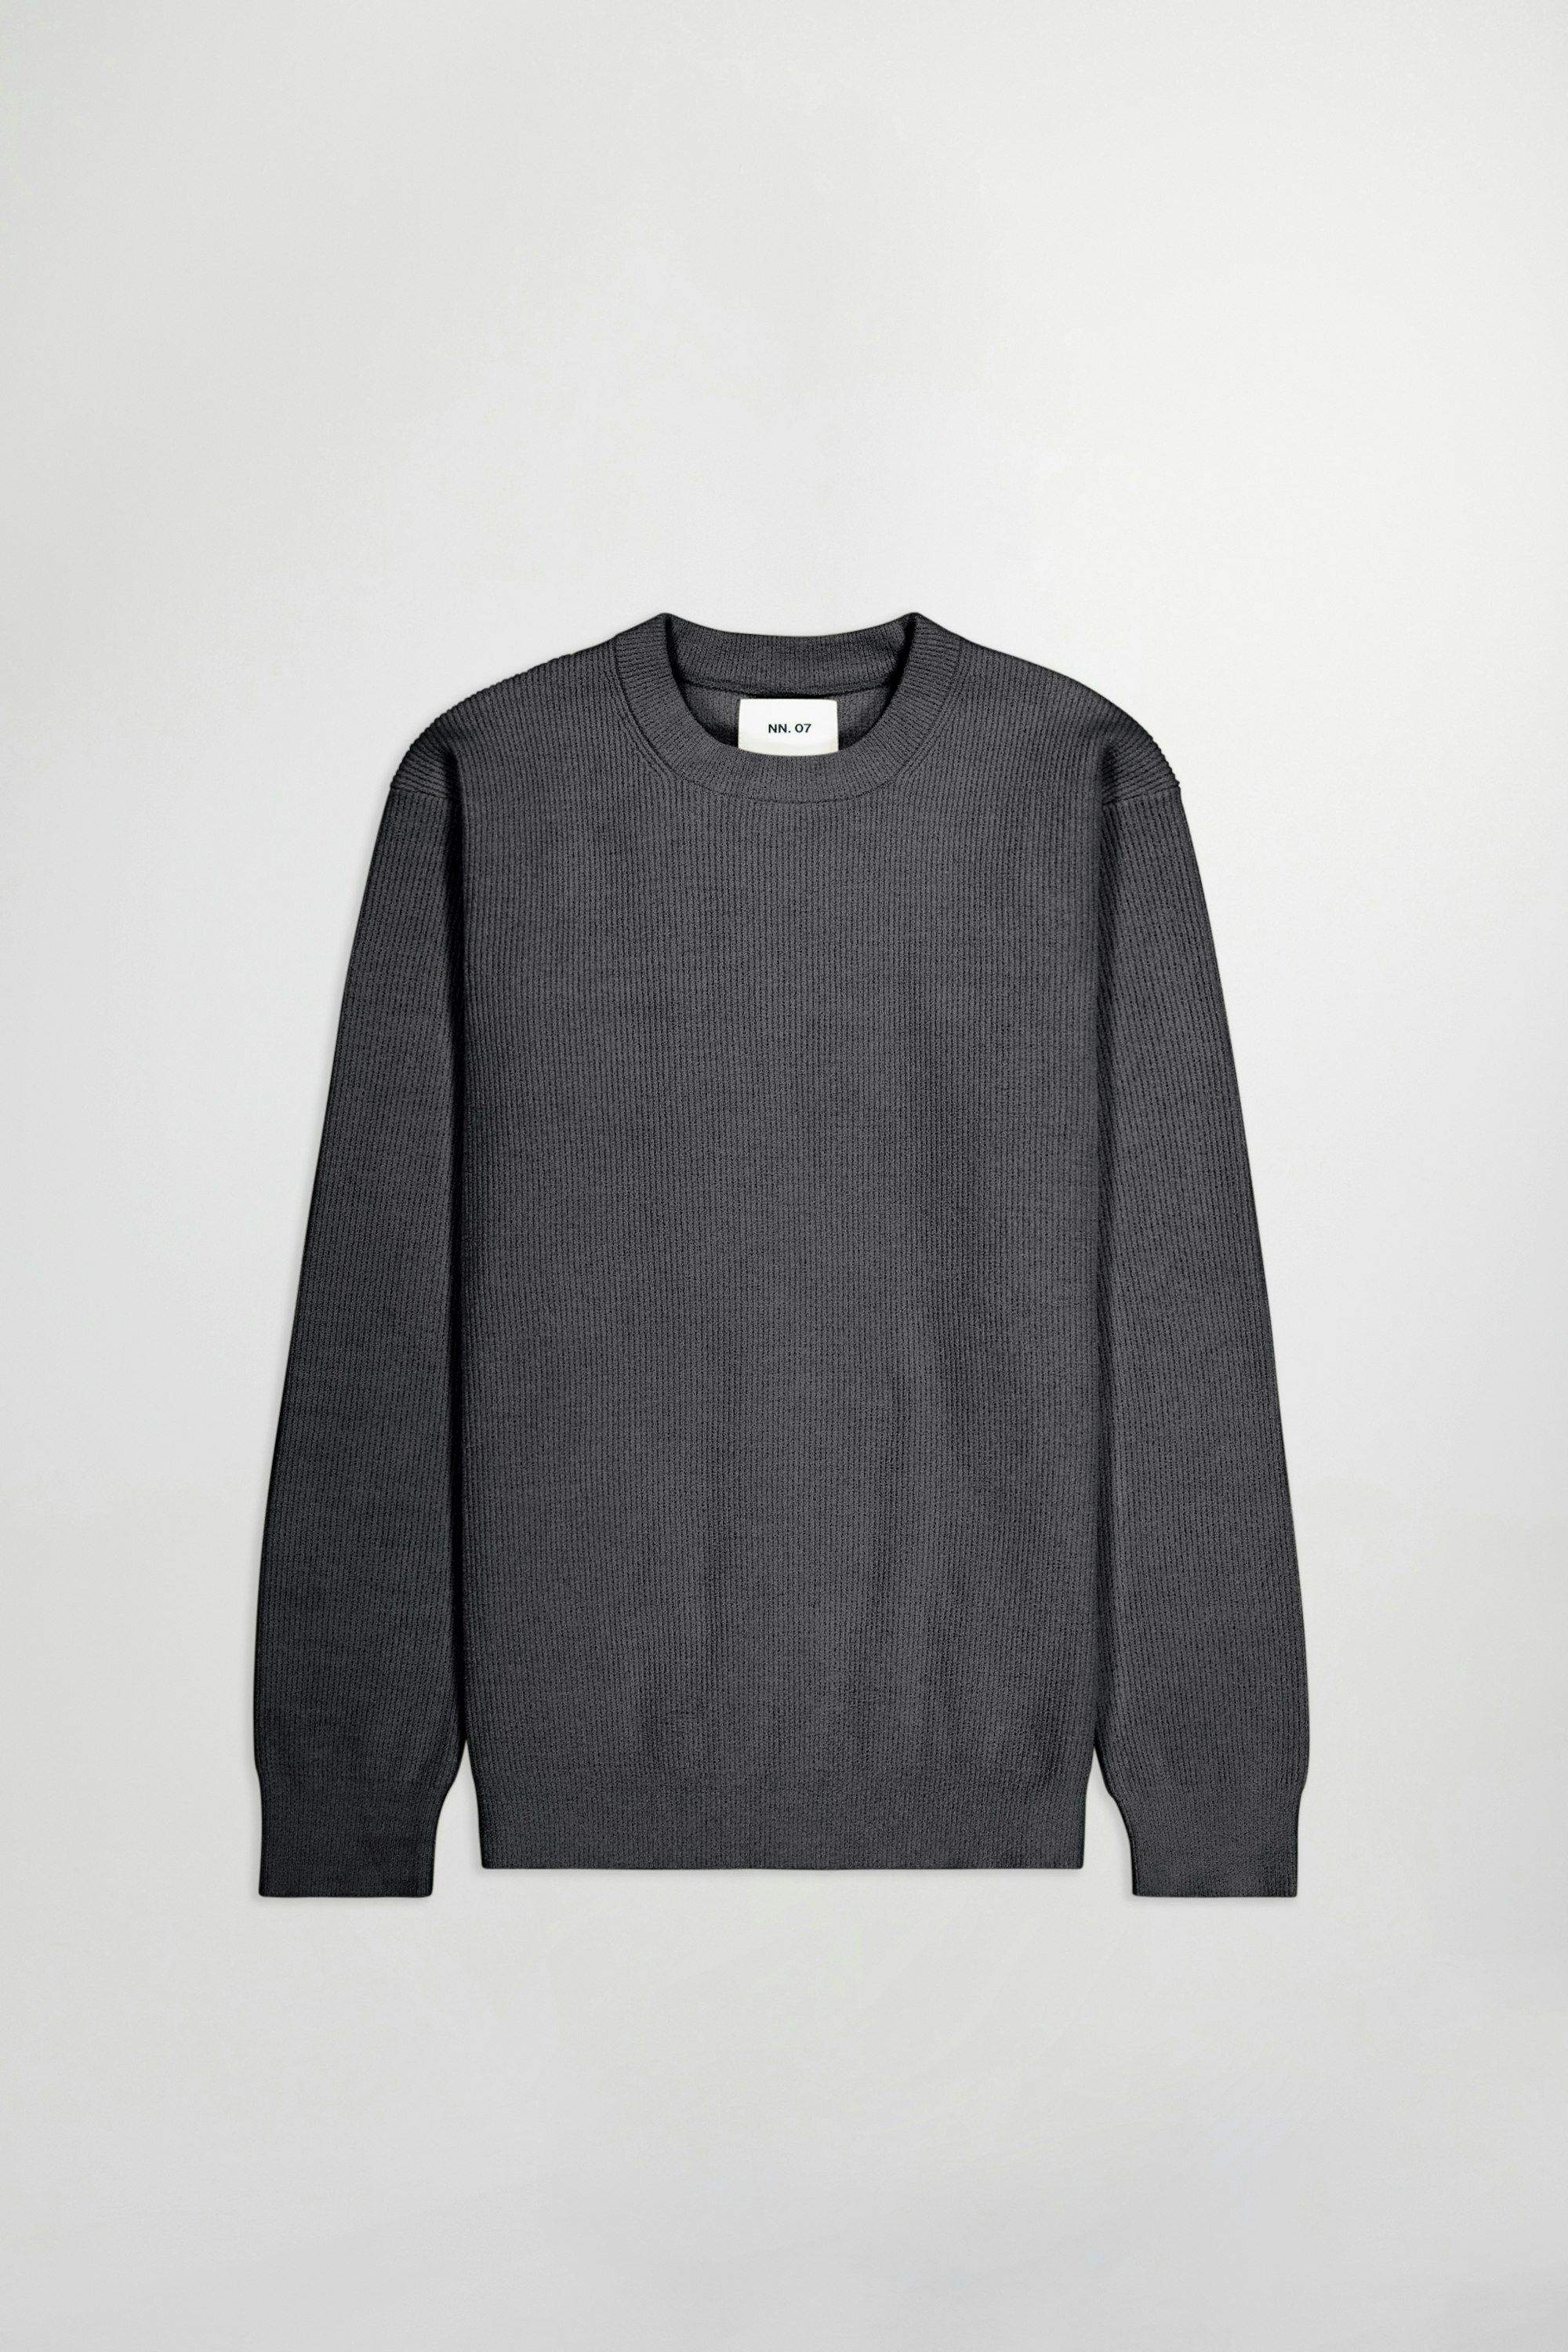 Too Plush Crewneck Sweater in Black